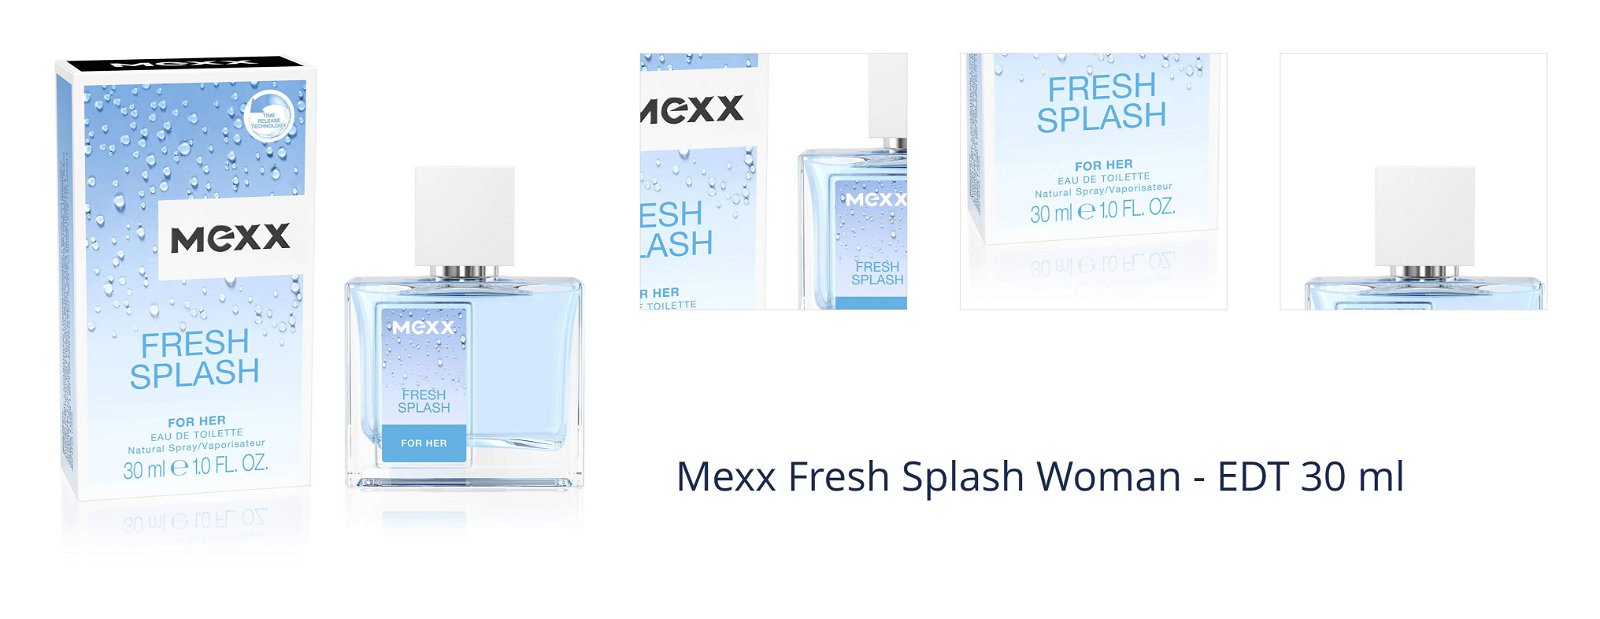 Mexx Fresh Splash Woman - EDT 30 ml 1